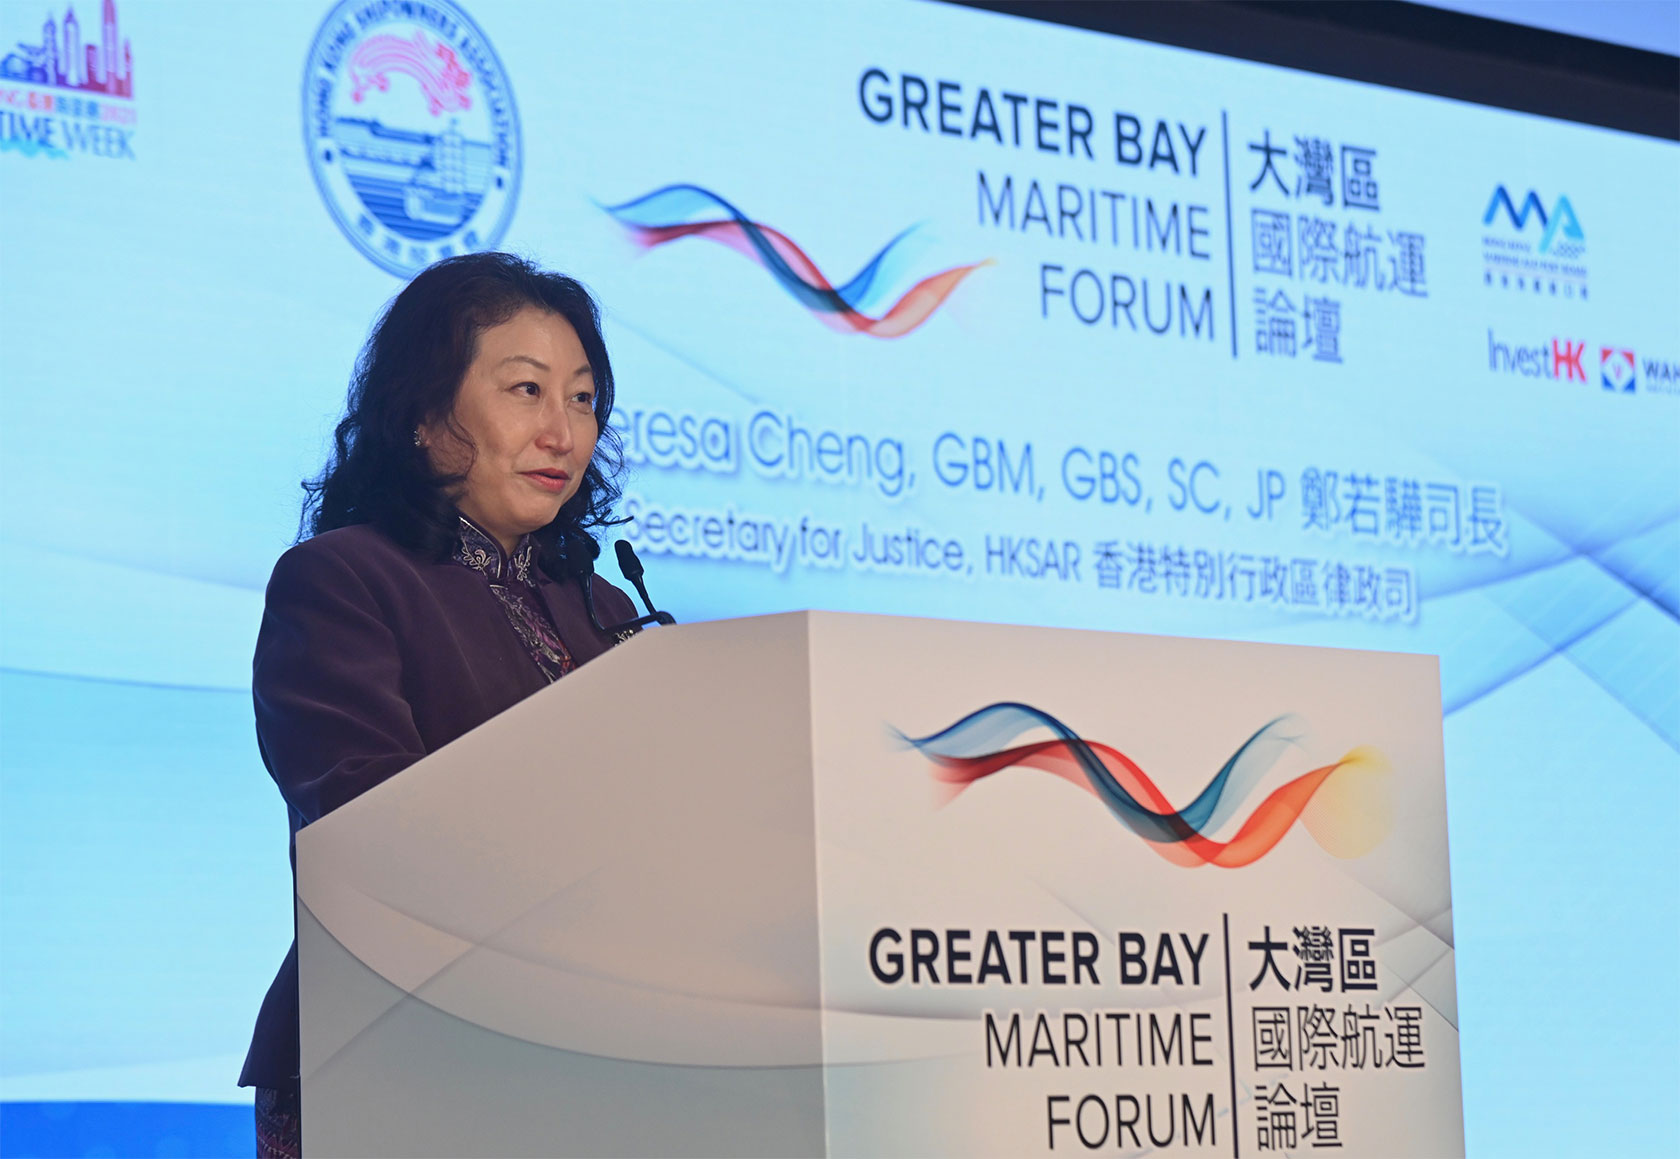 SJ attends Greater Bay Maritime Forum